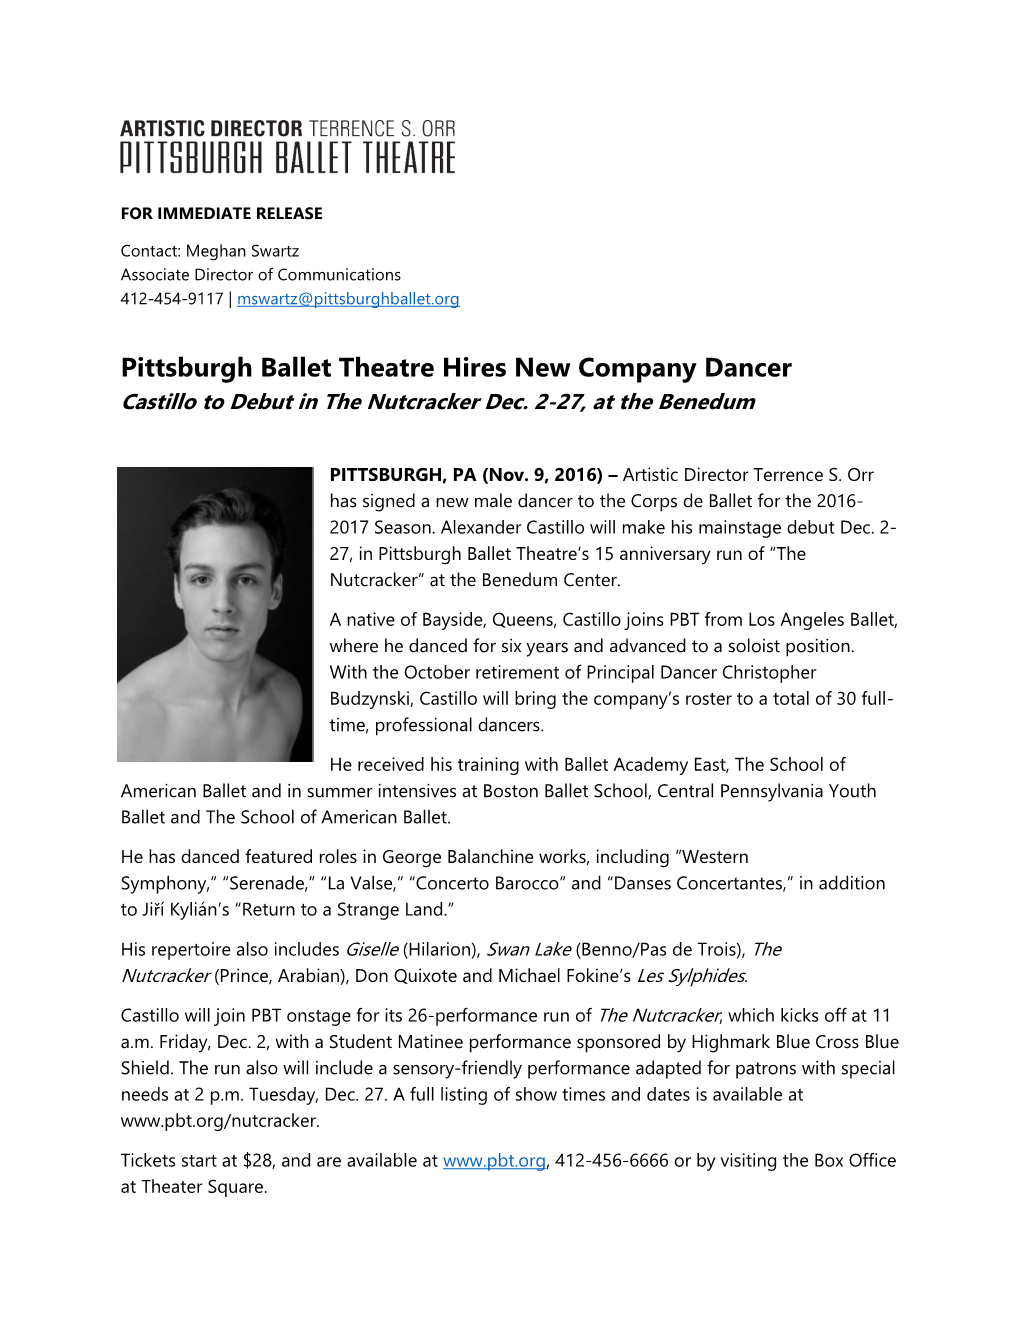 Pittsburgh Ballet Theatre Hires New Company Dancer Castillo to Debut in the Nutcracker Dec